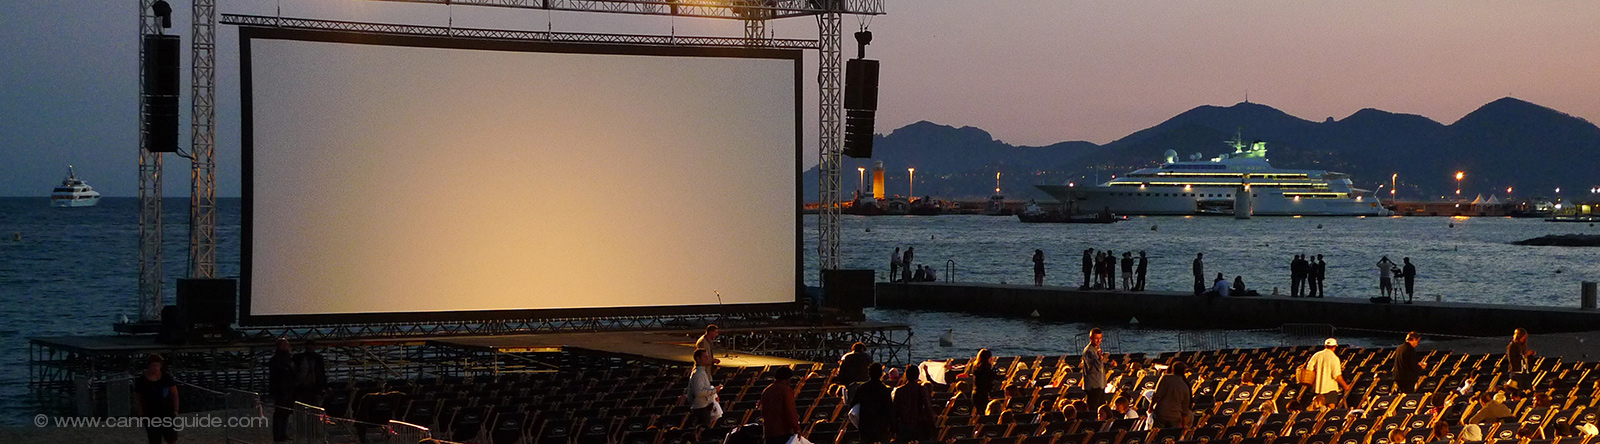 Cinema de la Plage, Cannes